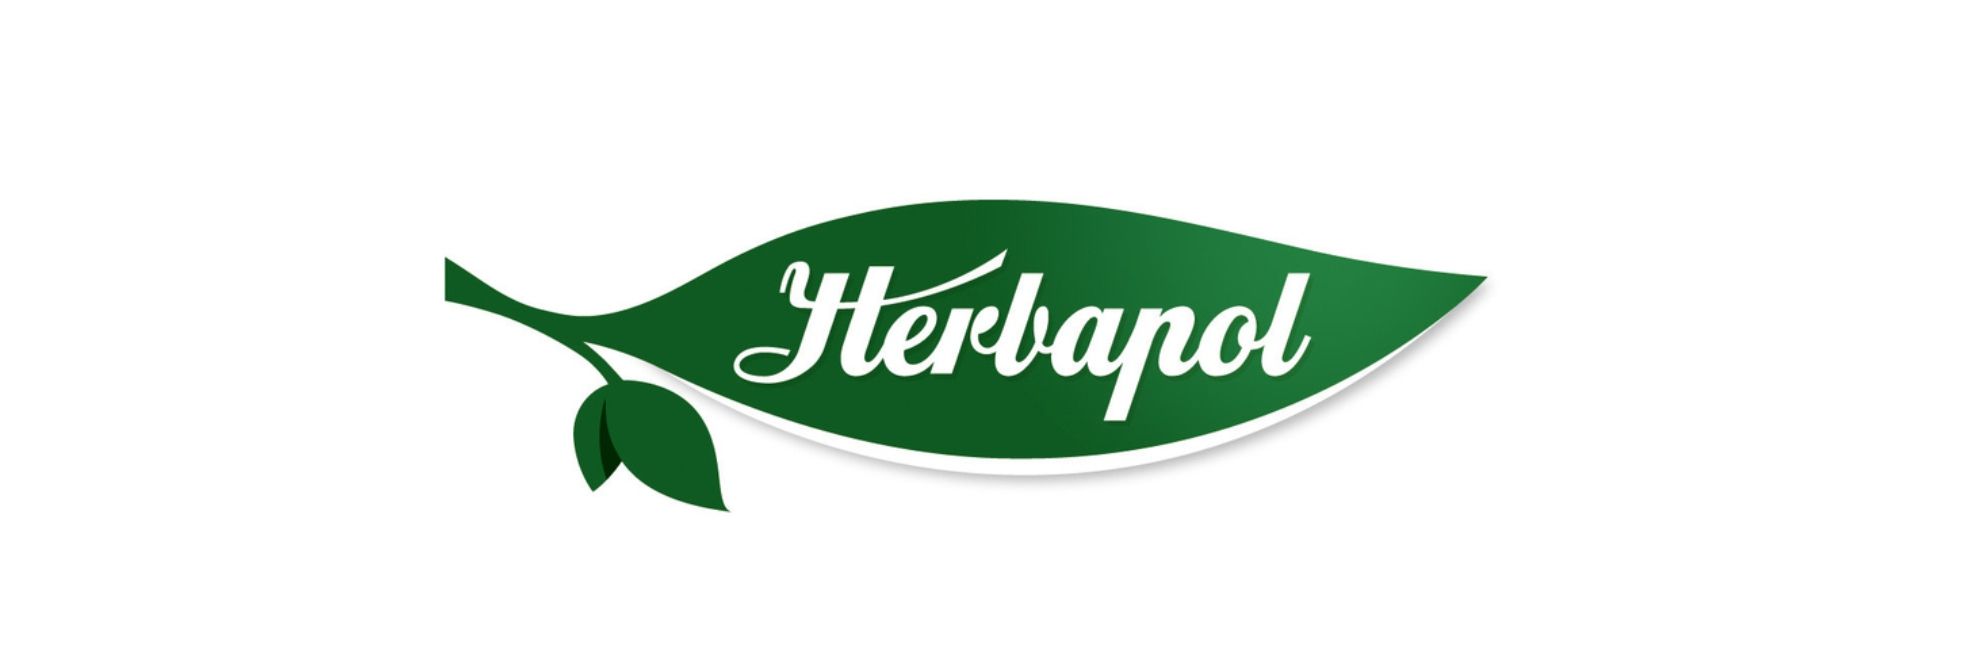 HERBAPOL